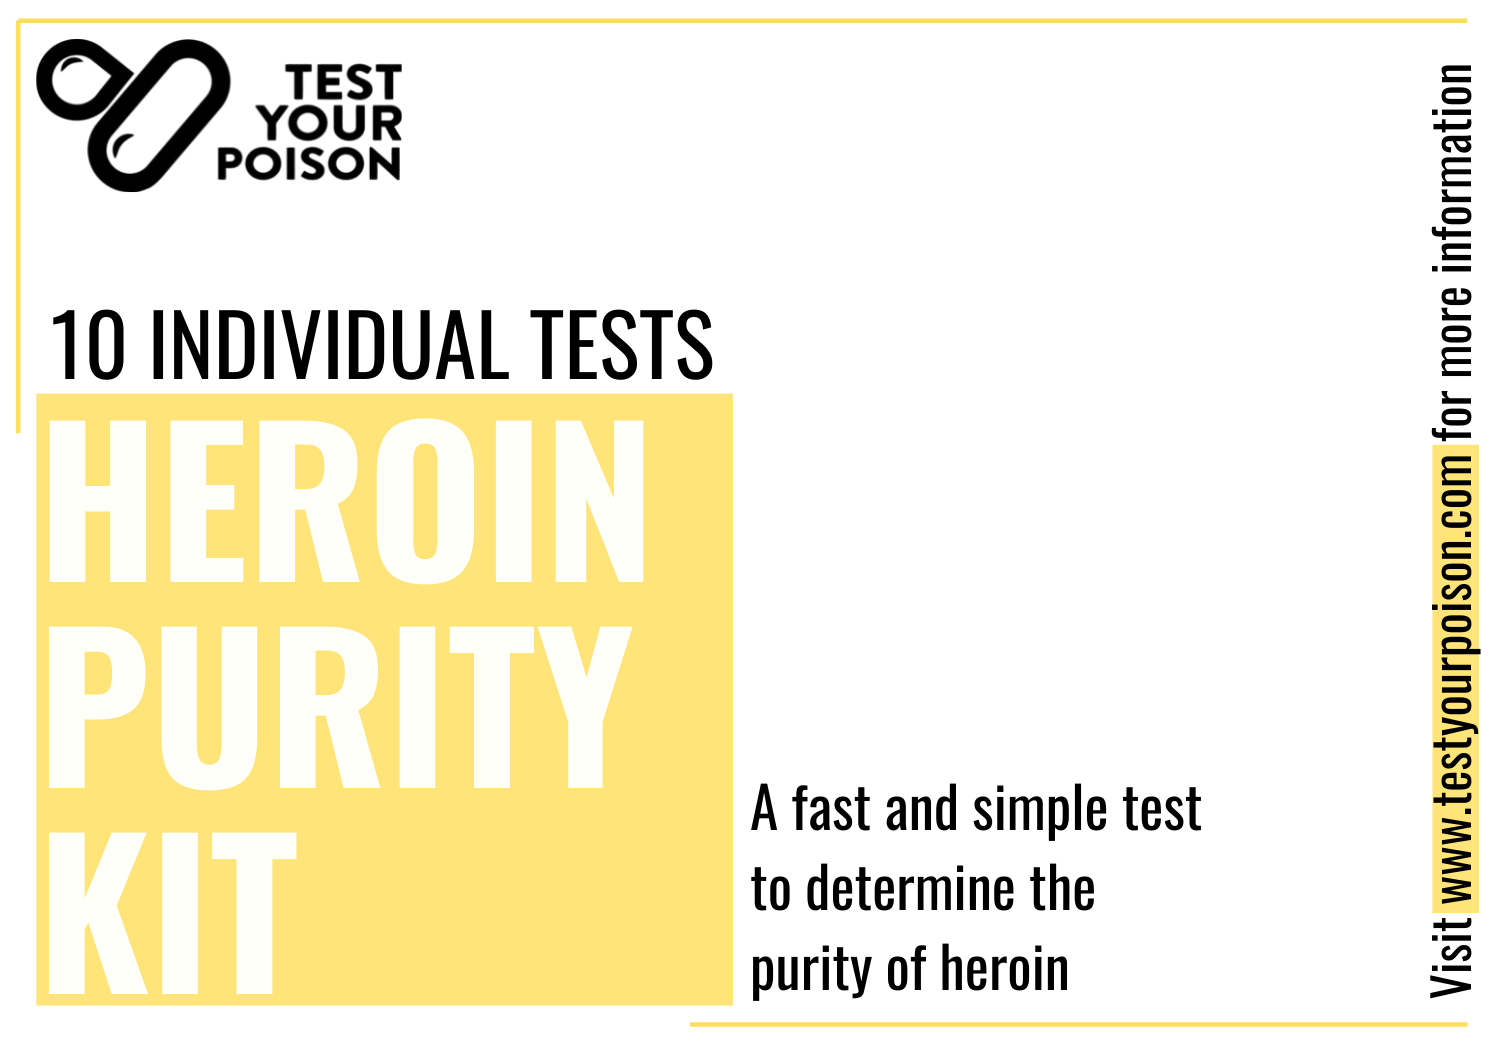 Heroin Purity Test Kit Packaging